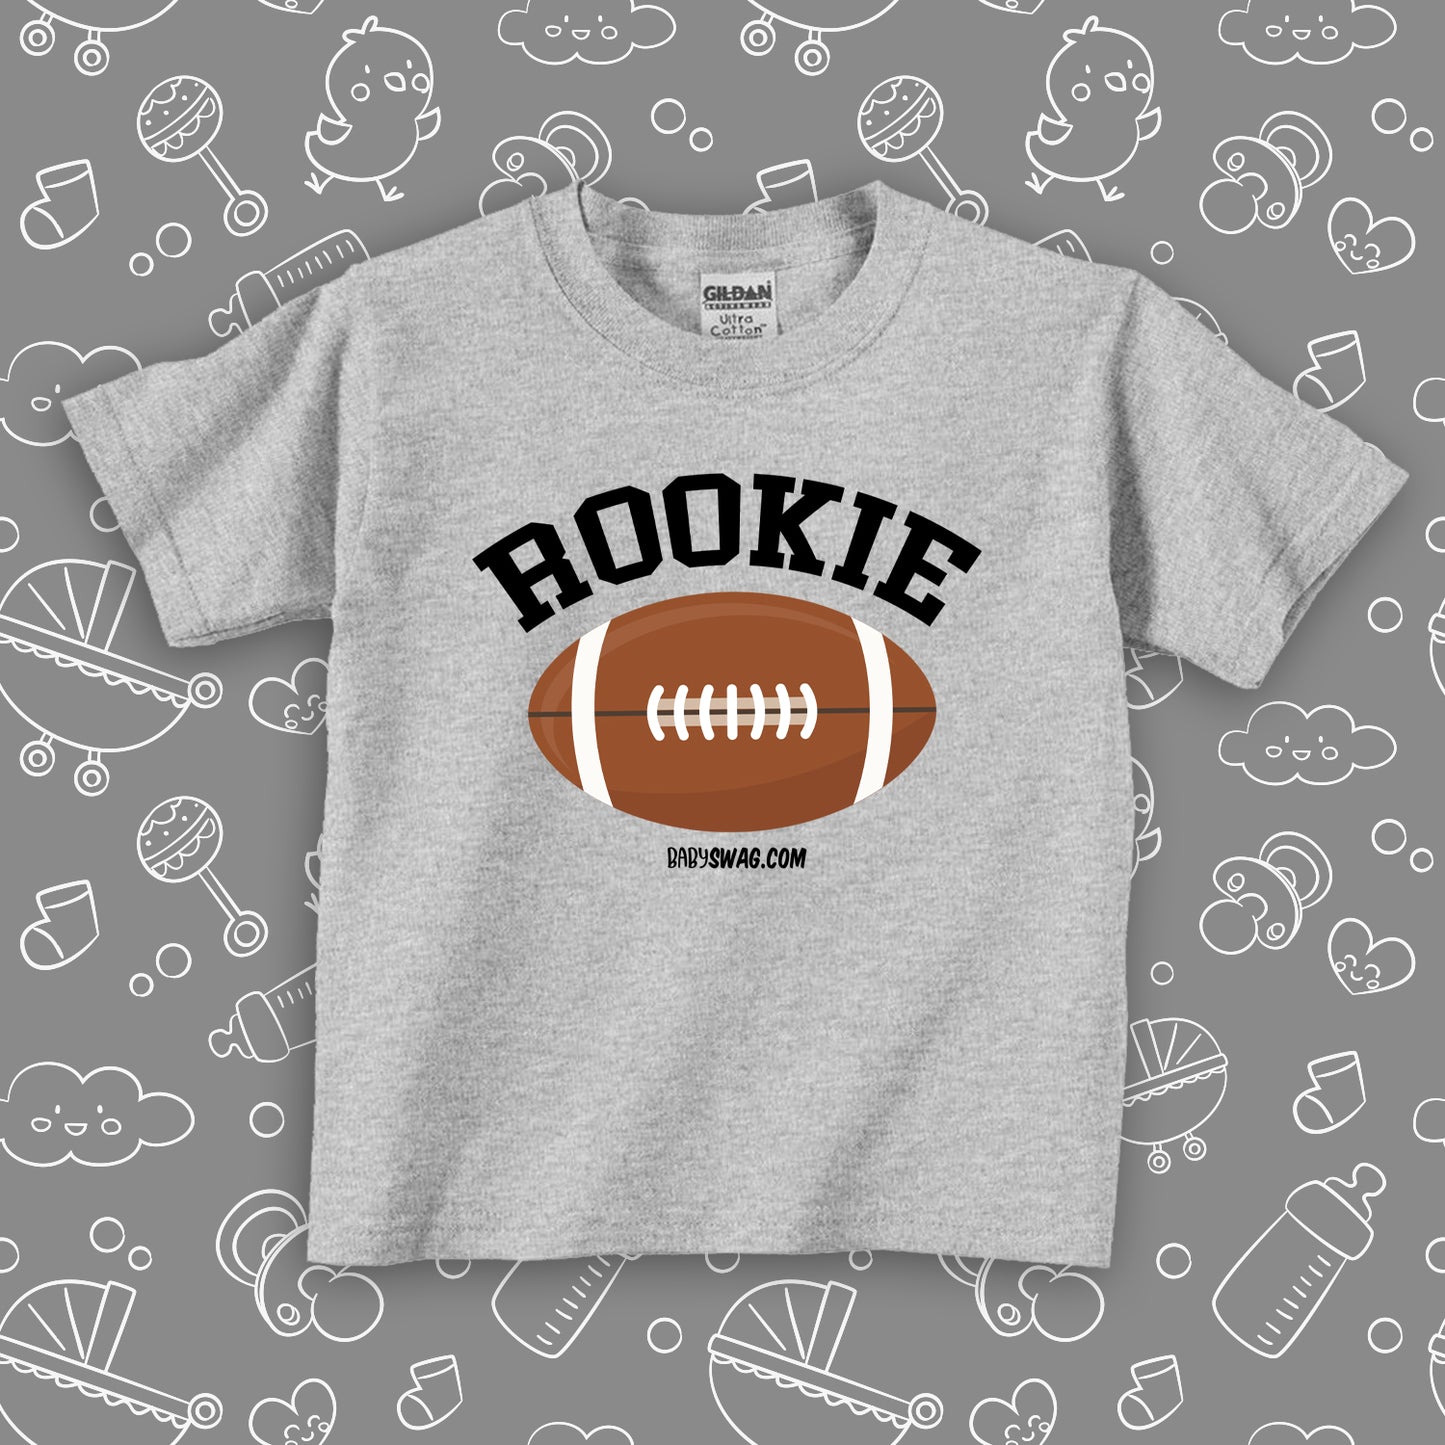 The "Rookie" toddler biy shirt in grey. 